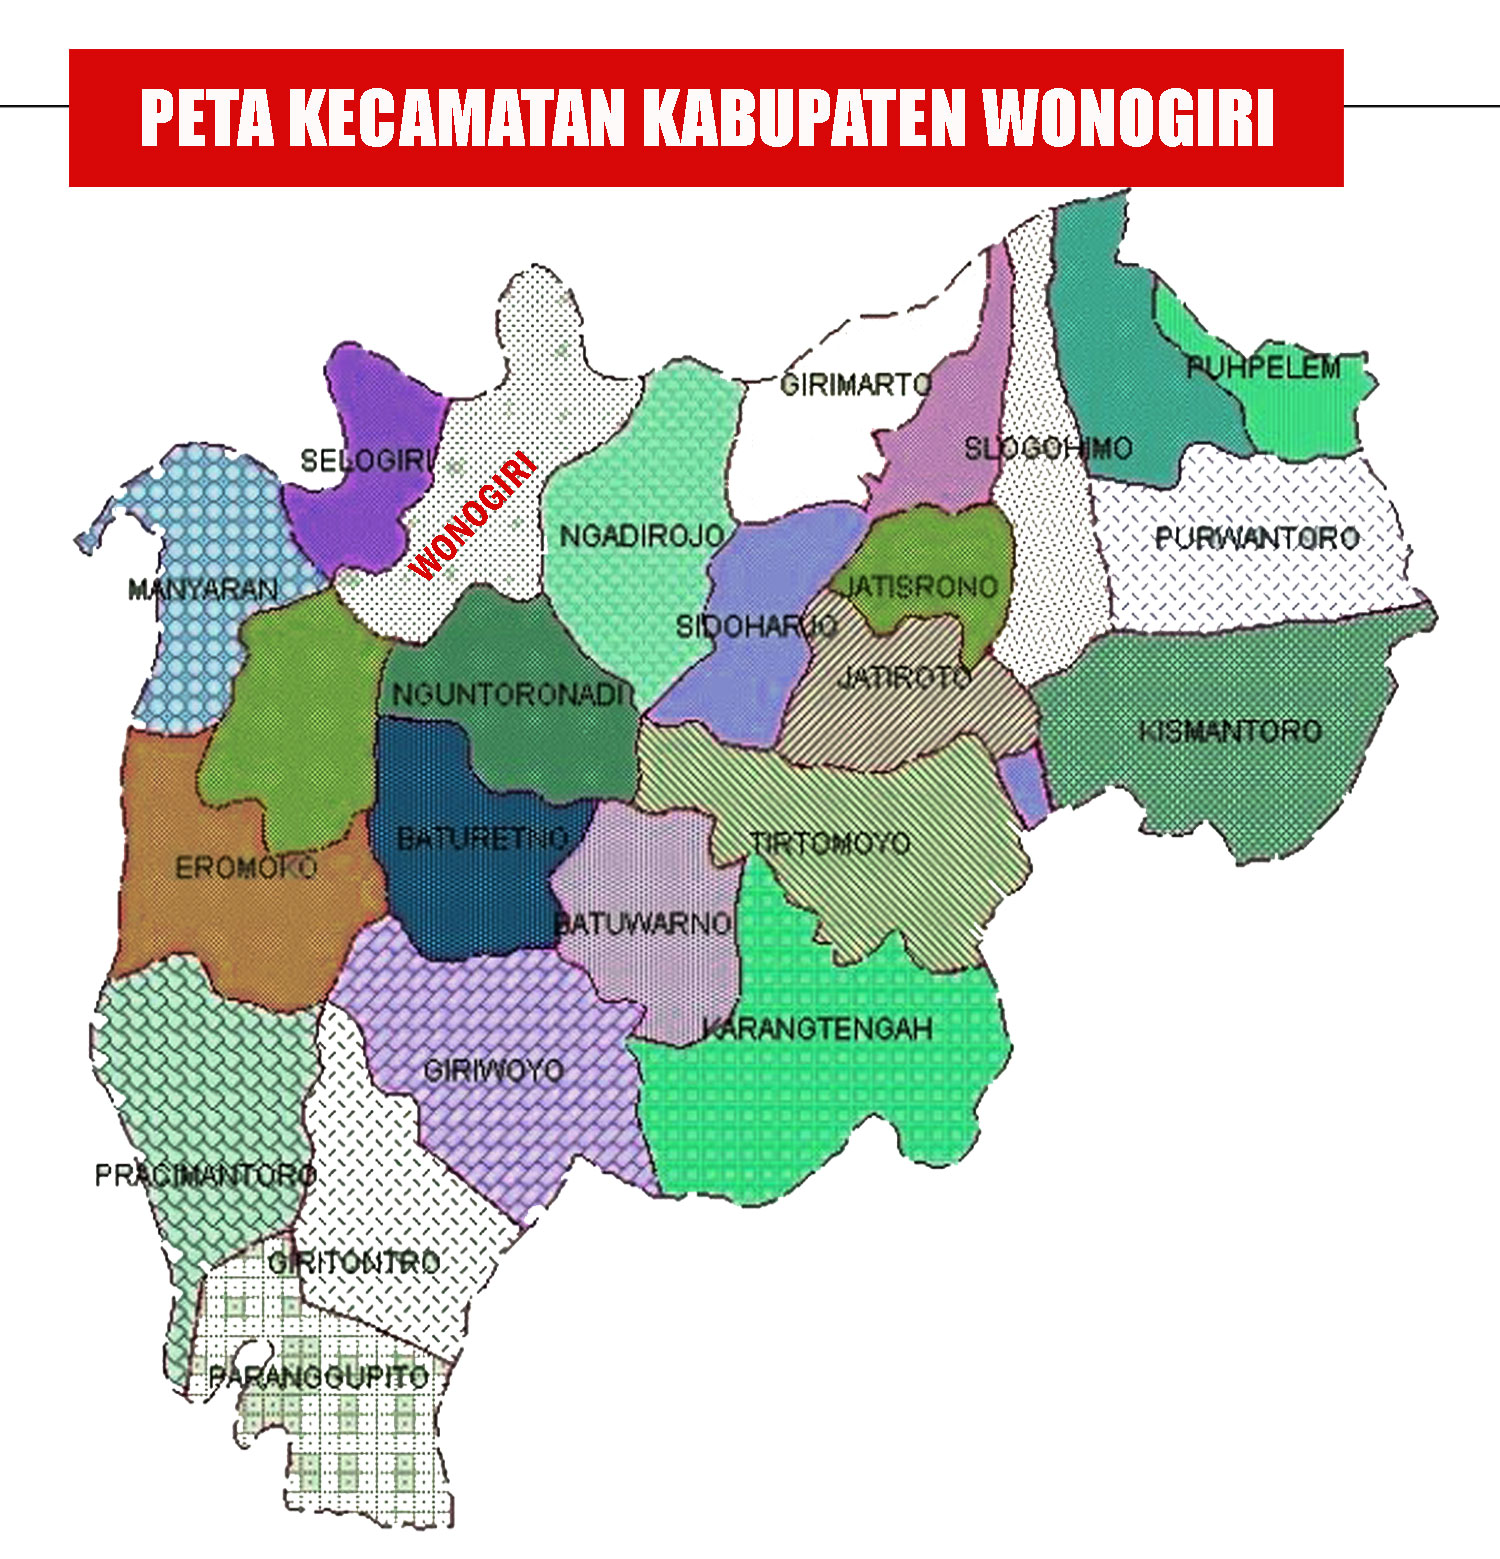 Peta Kecamatan Kabupaten Wonogiri